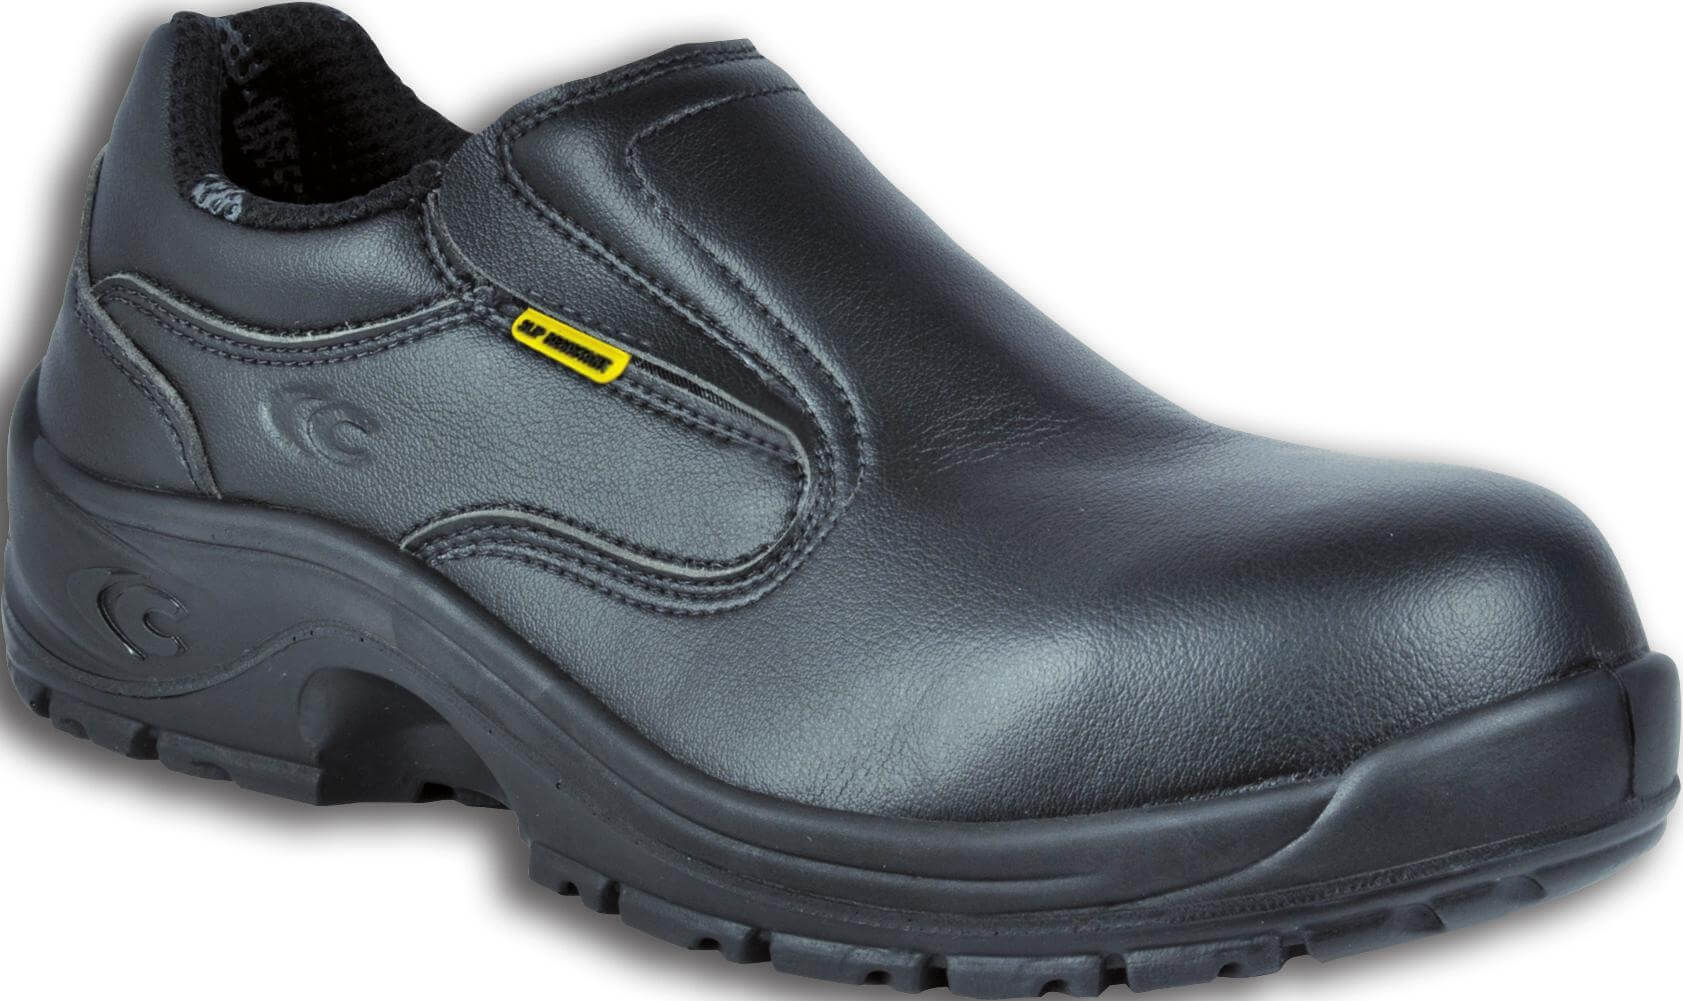 Kendall SD PR Slip Resistant Composite Toe Work Shoe